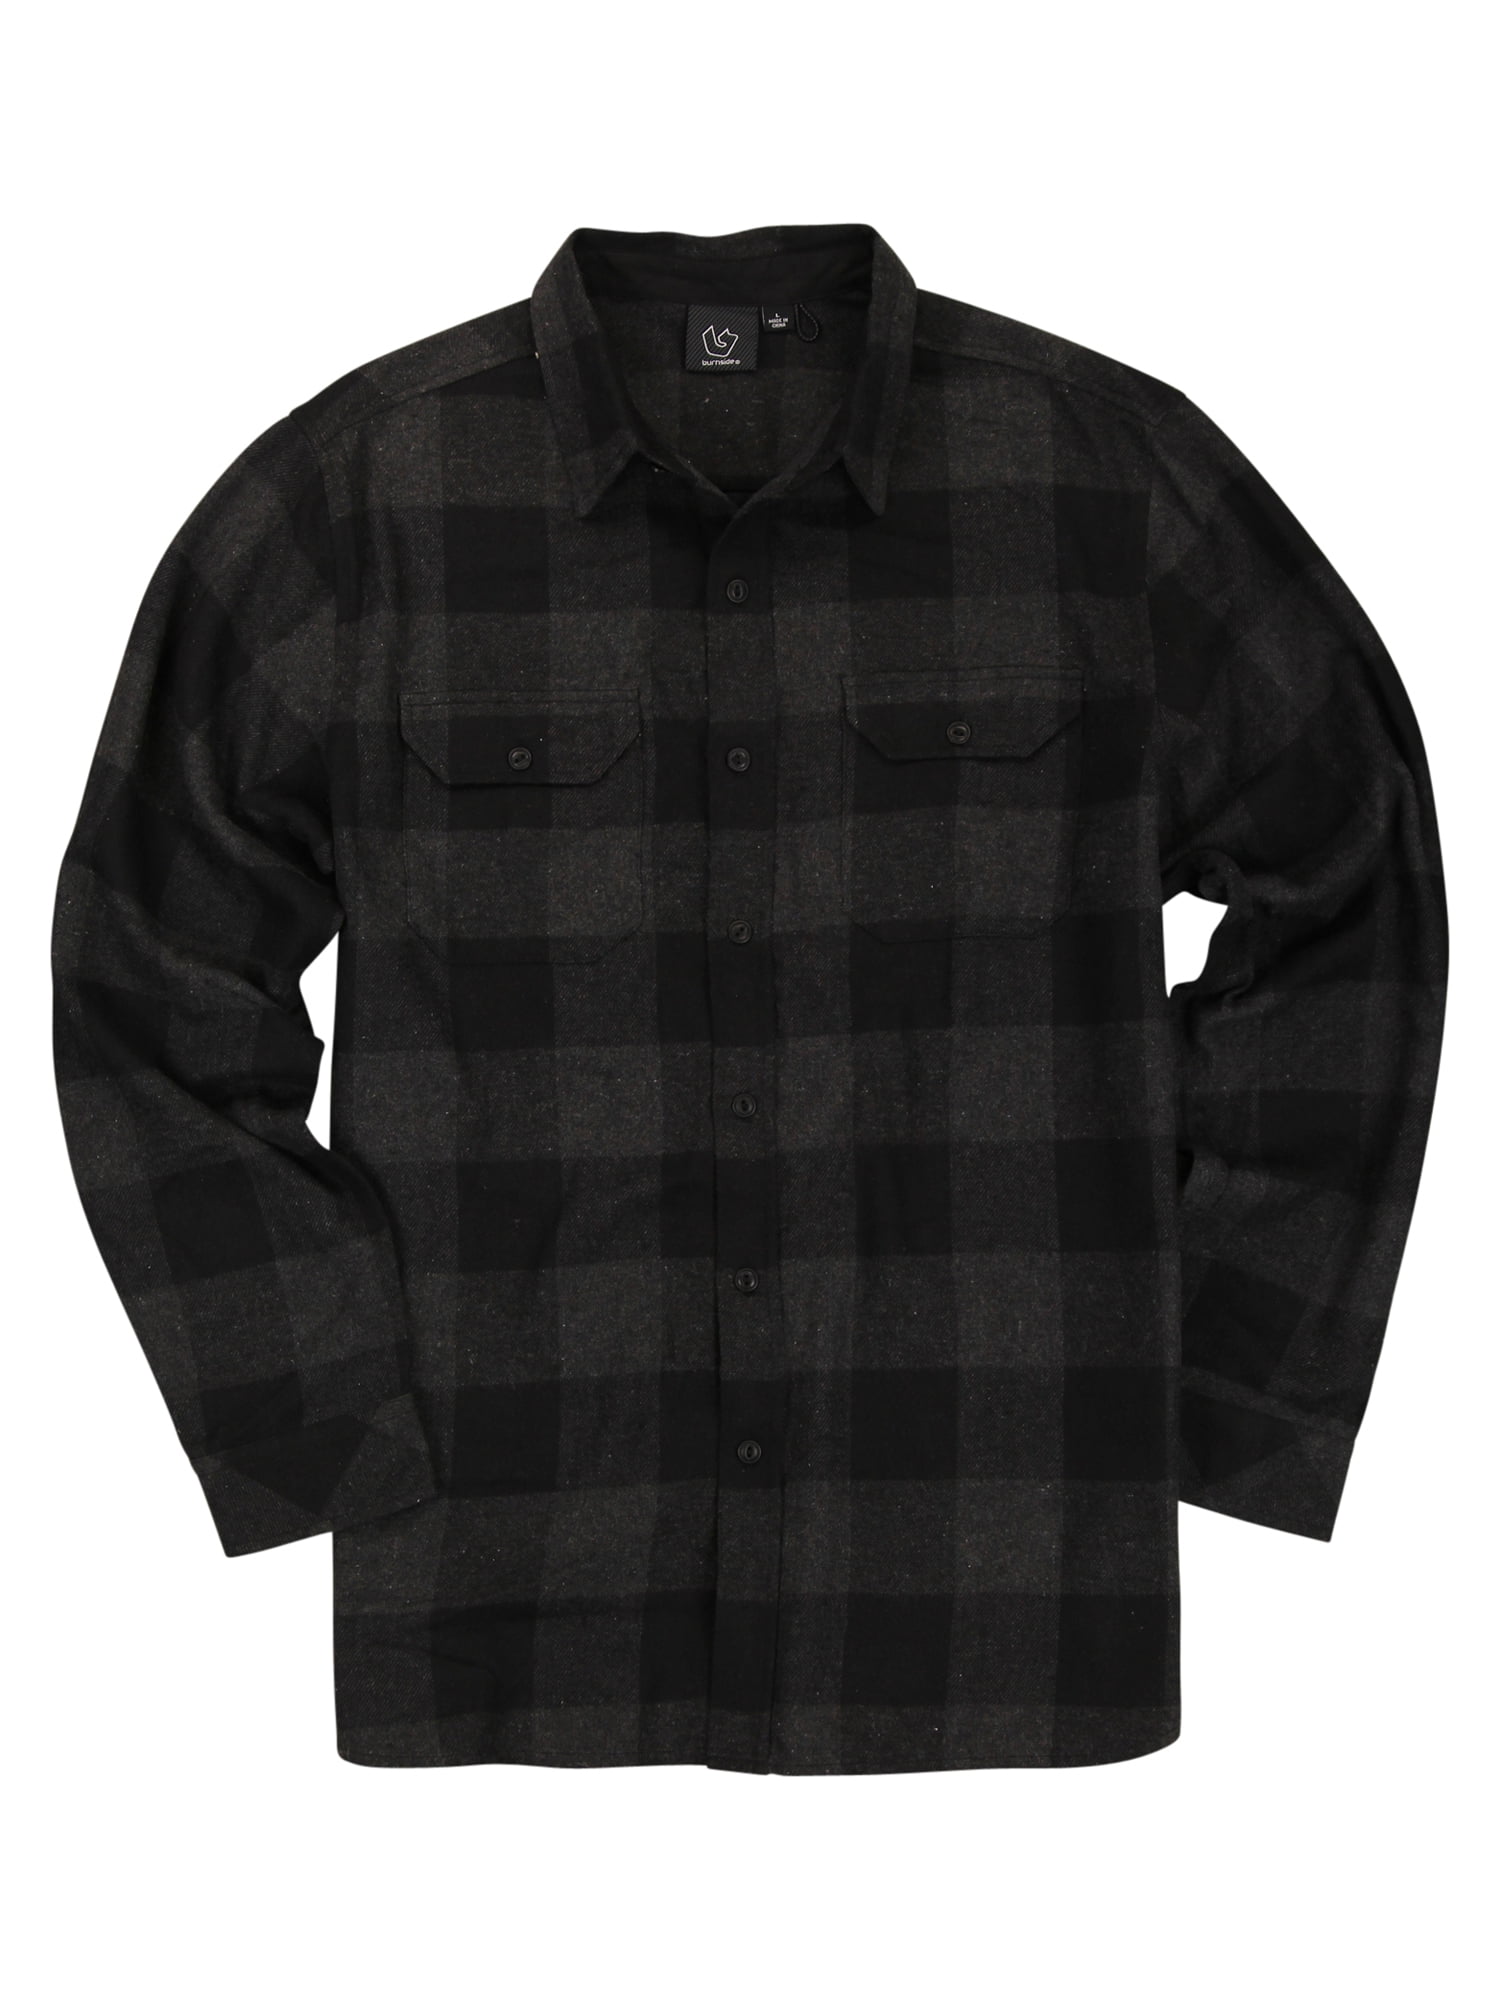 Men\'s Button Down Large) Flannel (BW8281) (Black, Sleeve Long Shirt